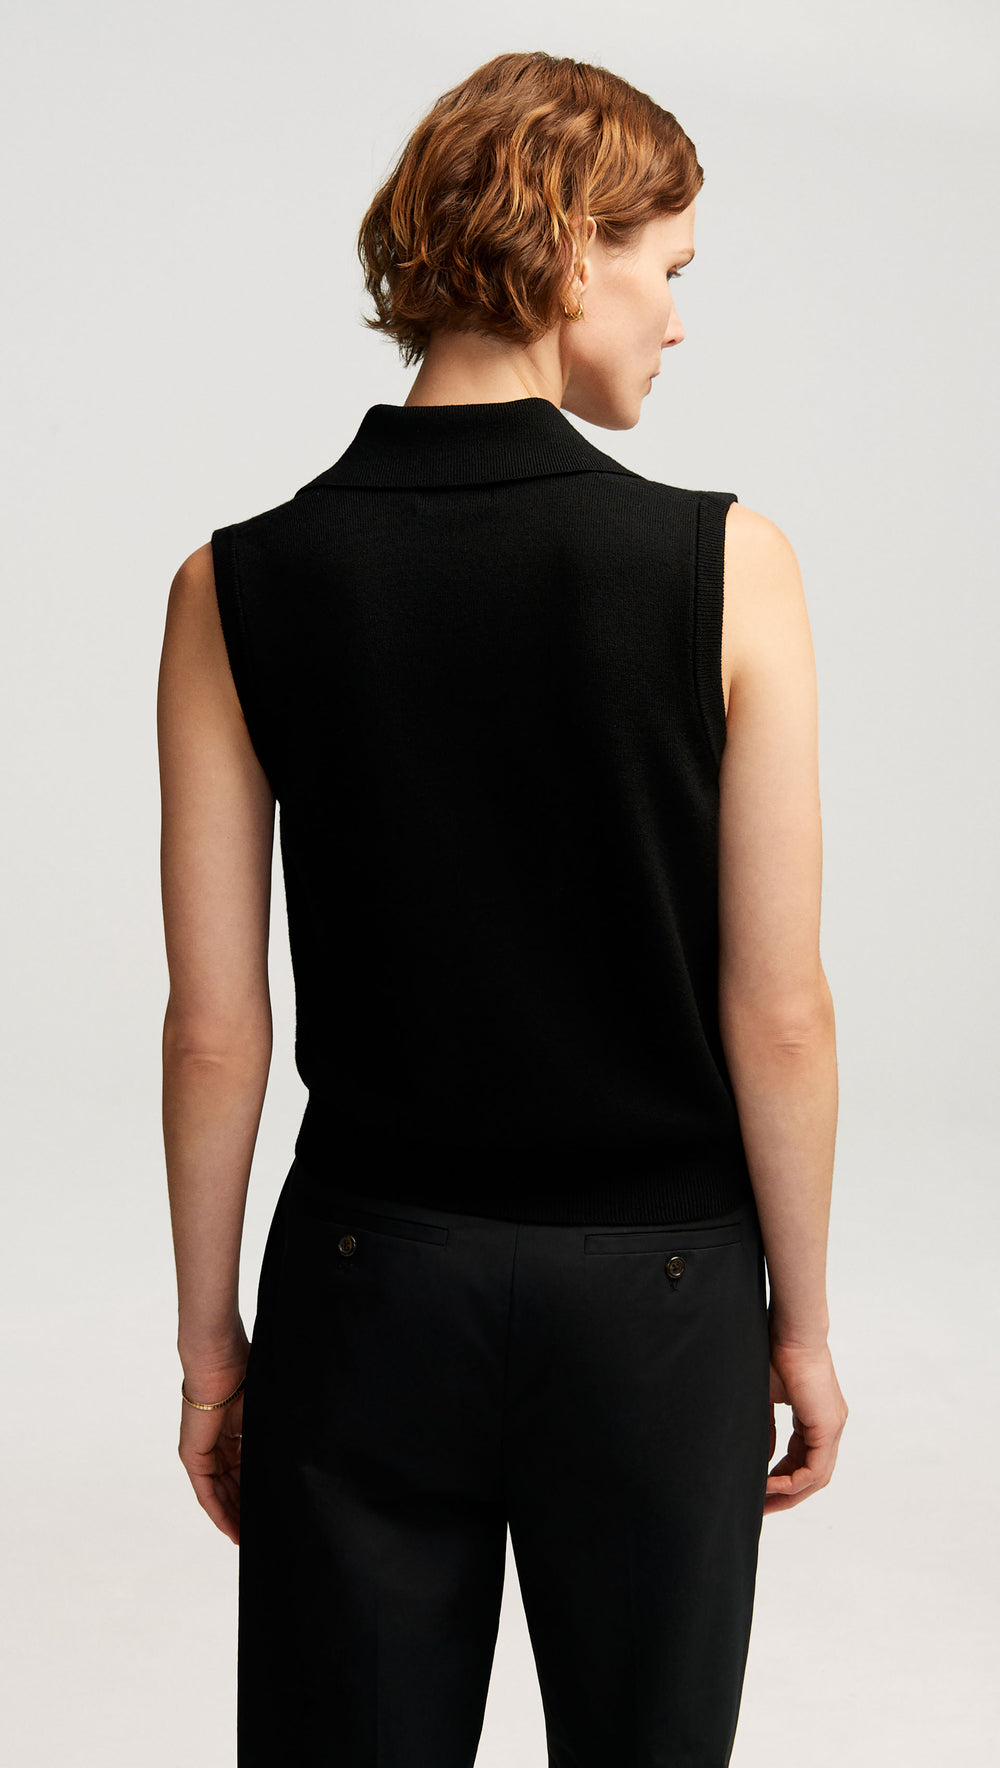 Collared Sleeveless Knit in Merino Wool | Black